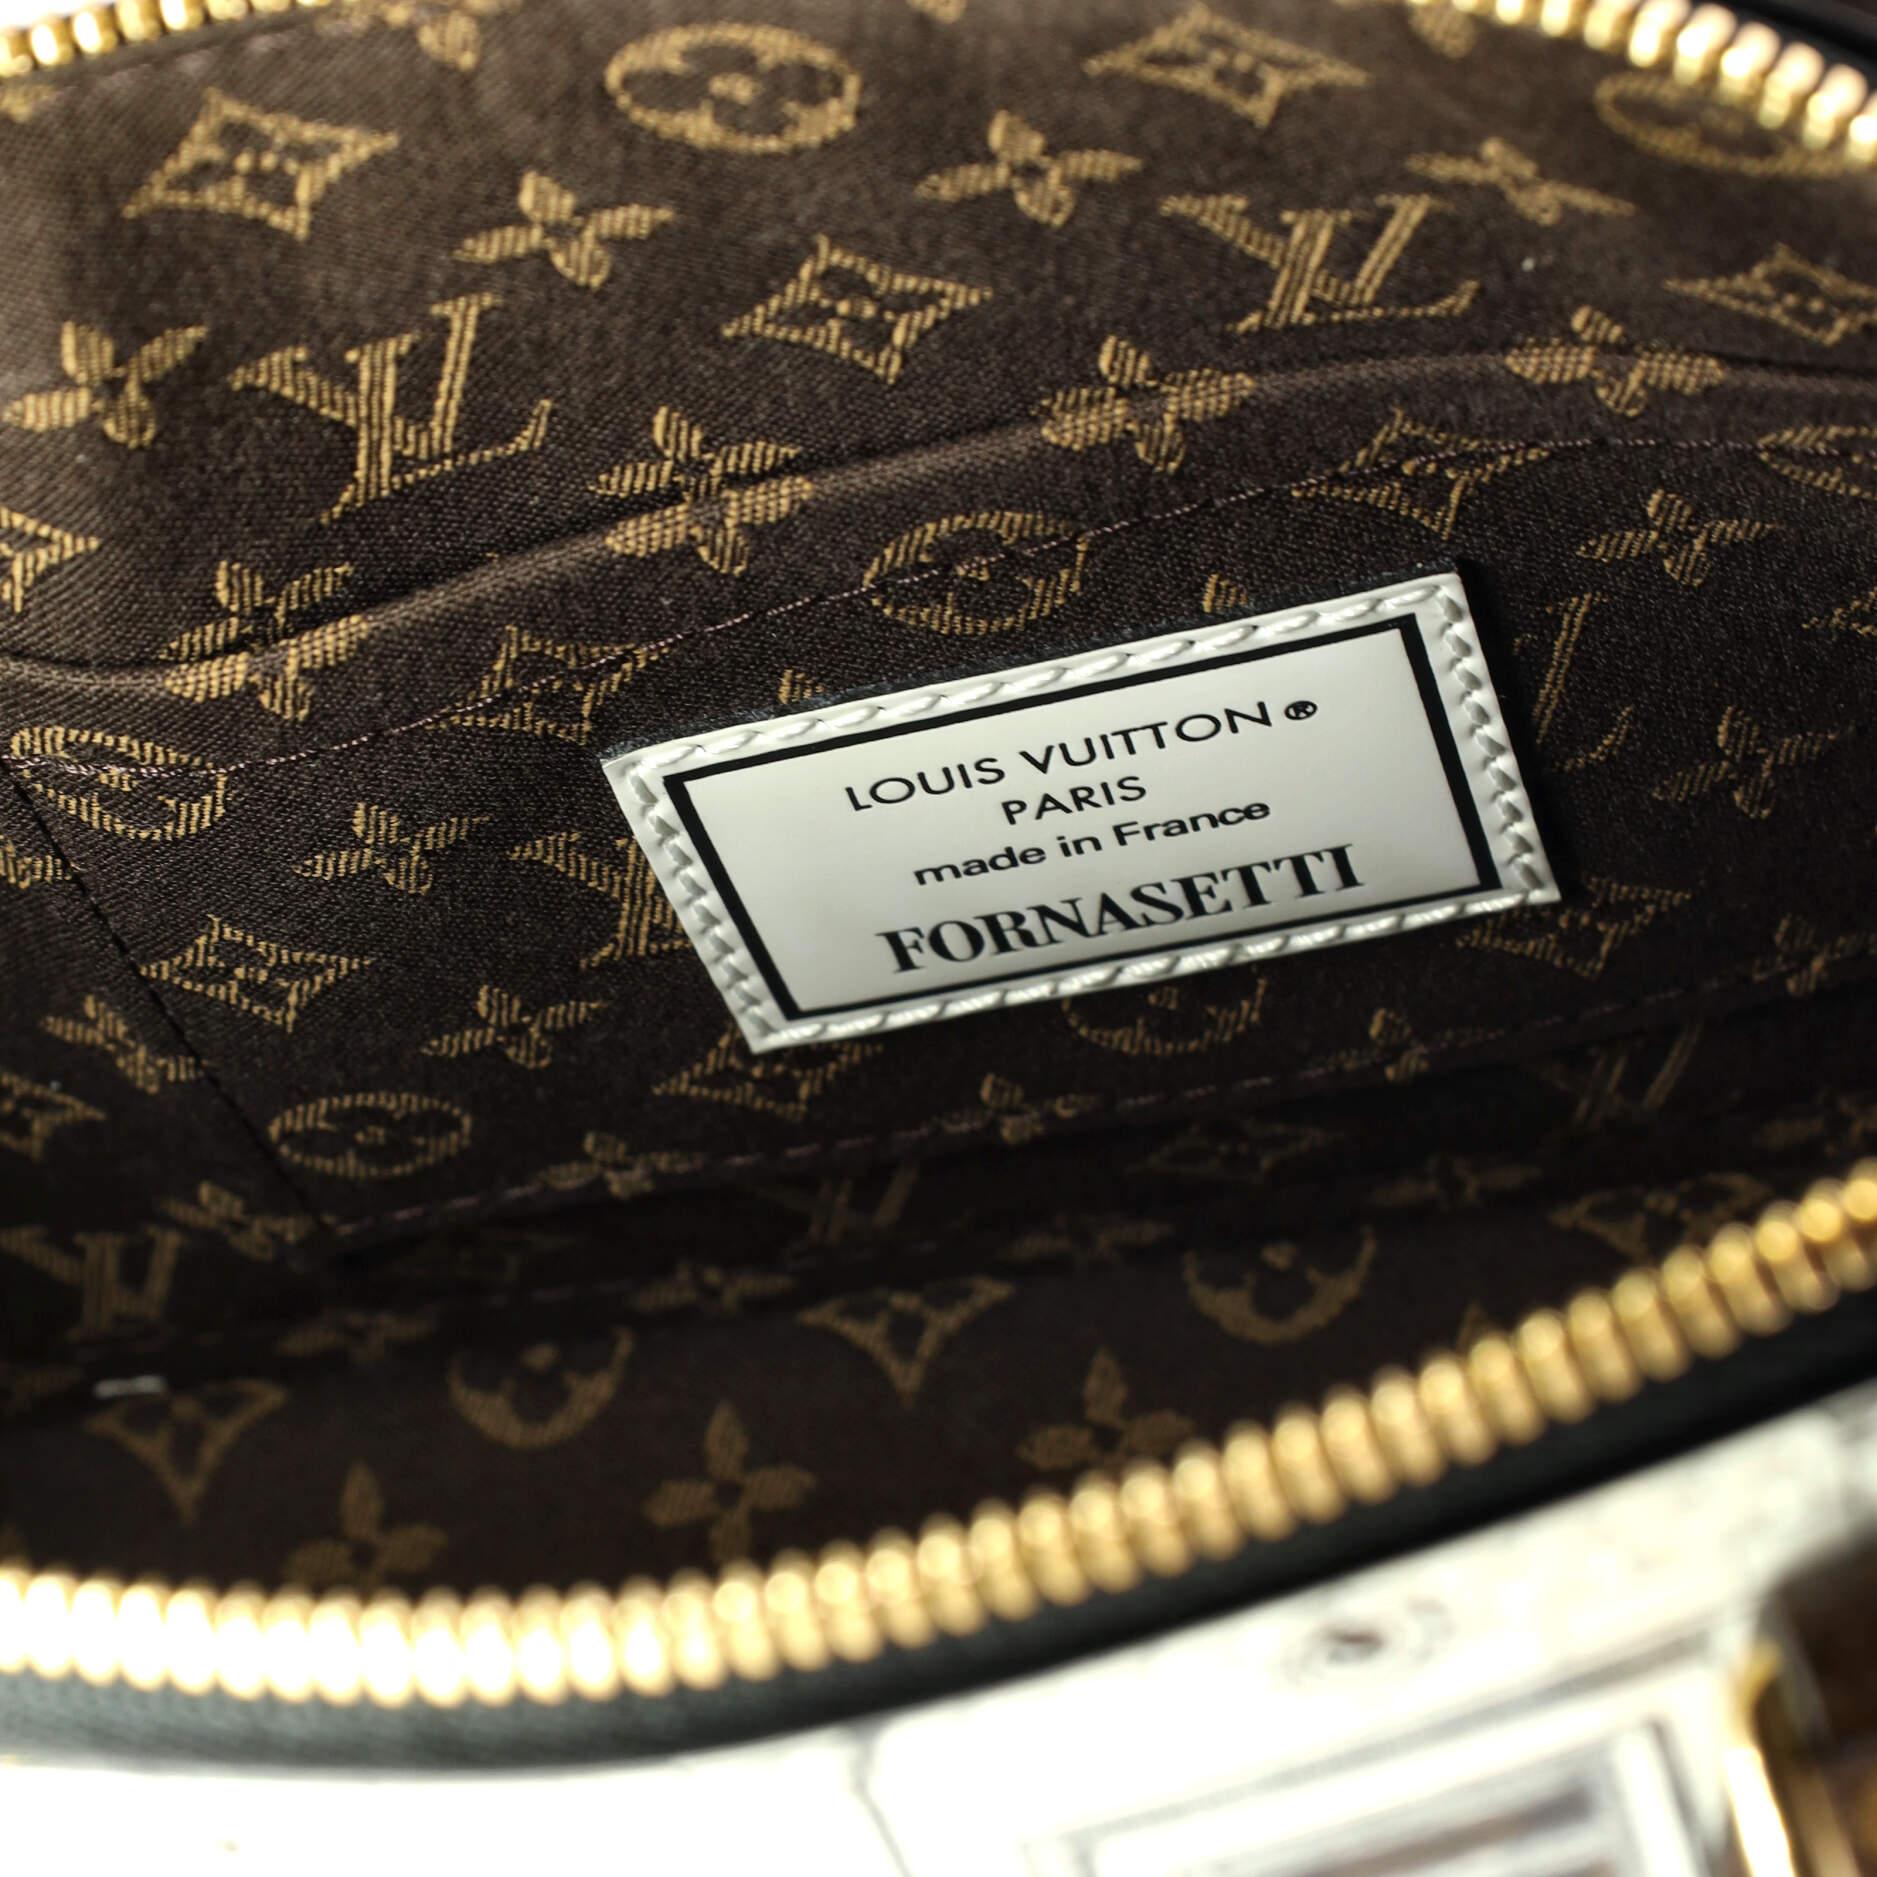 Louis Vuitton Alma Handbag Limited Edition Fornasetti Architettura Print Leather 3